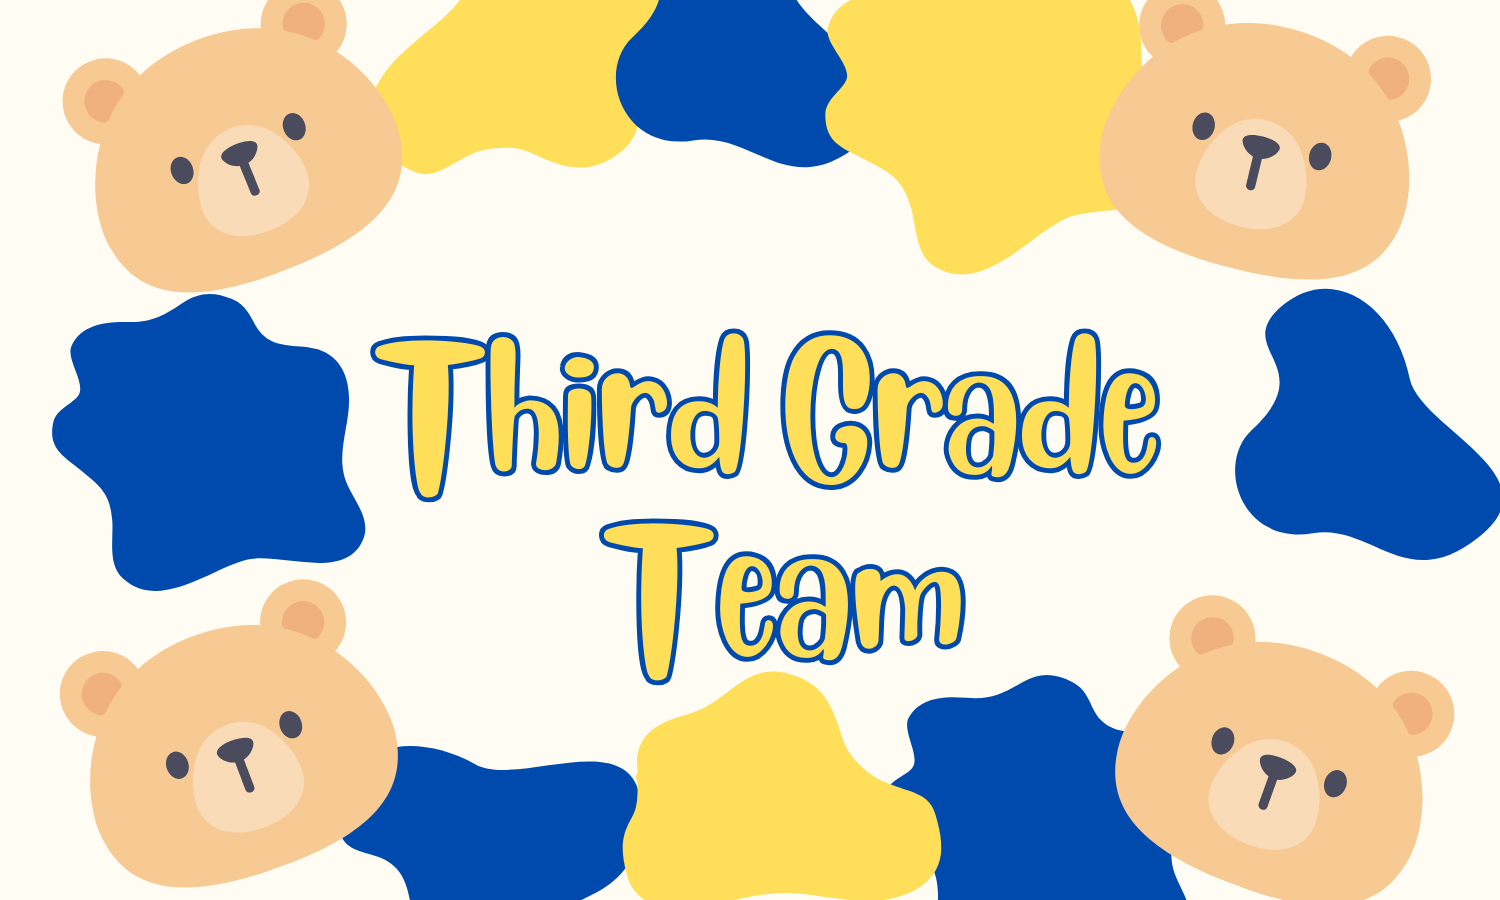 Third Grade Team Image Title